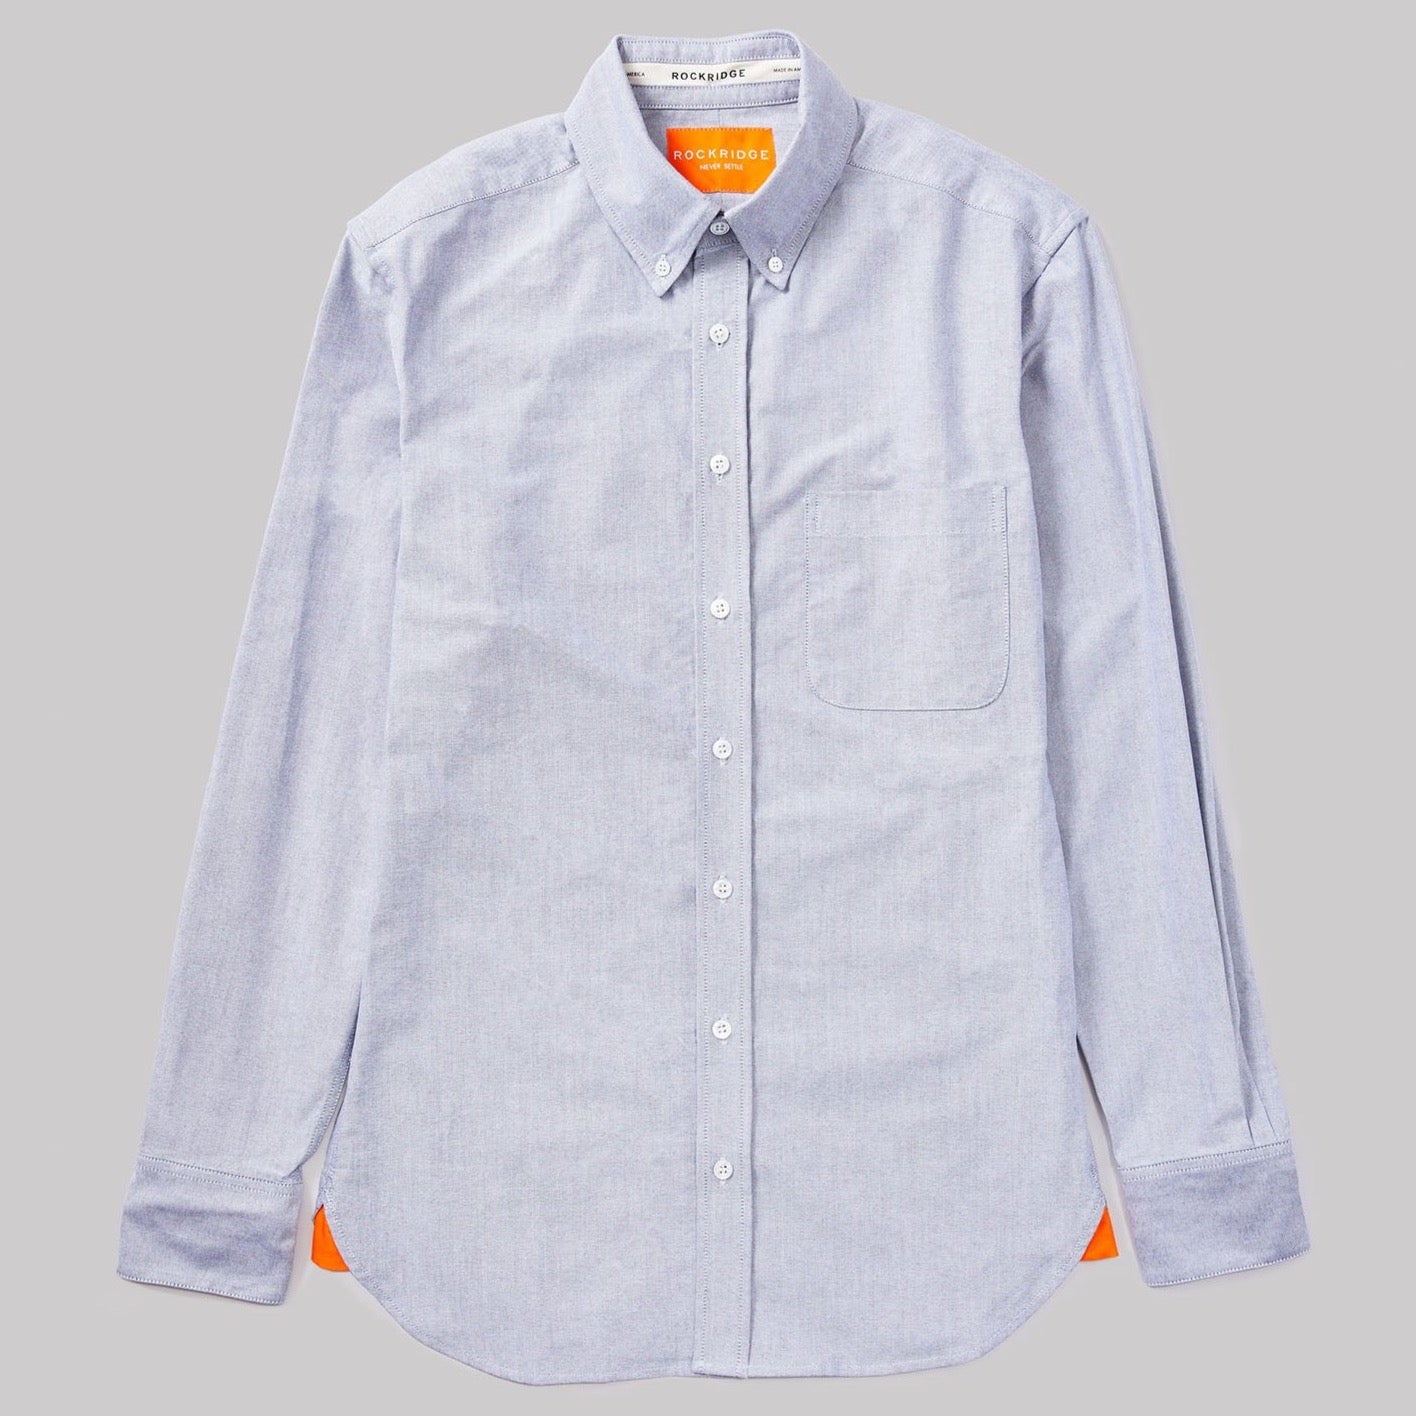 grey Oxford button down shirt